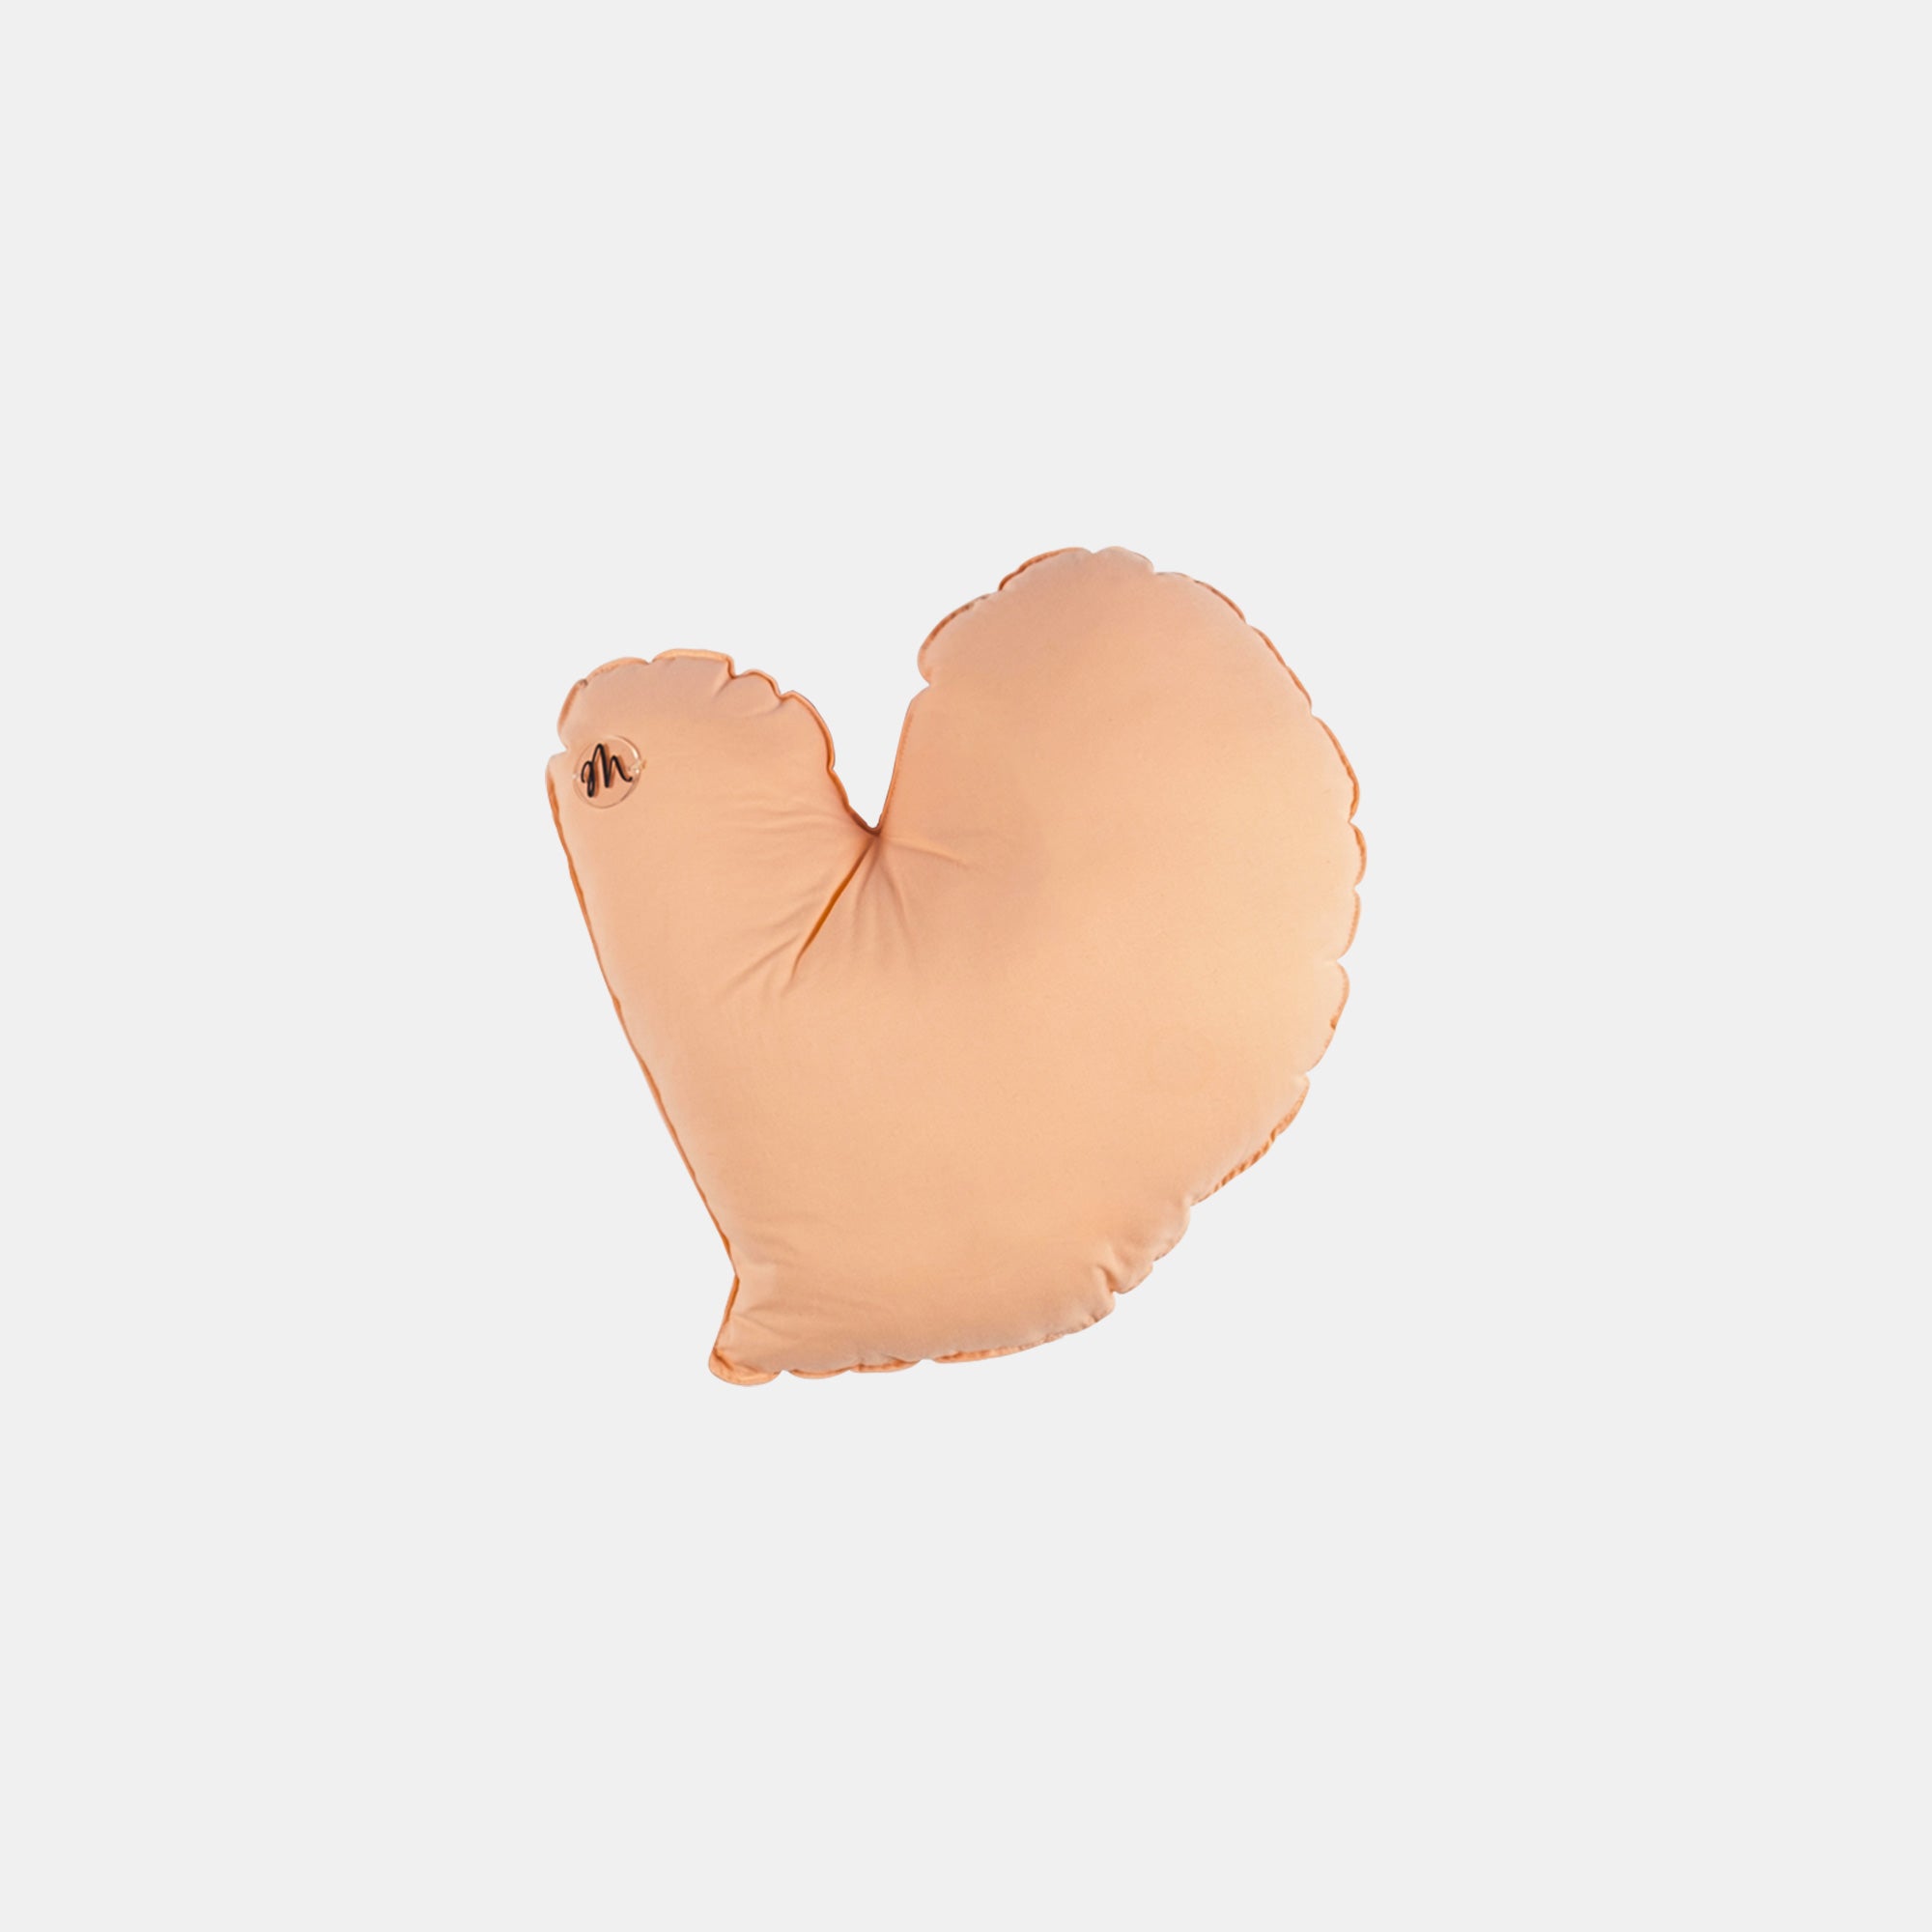 Handmade heart-shaped cushion